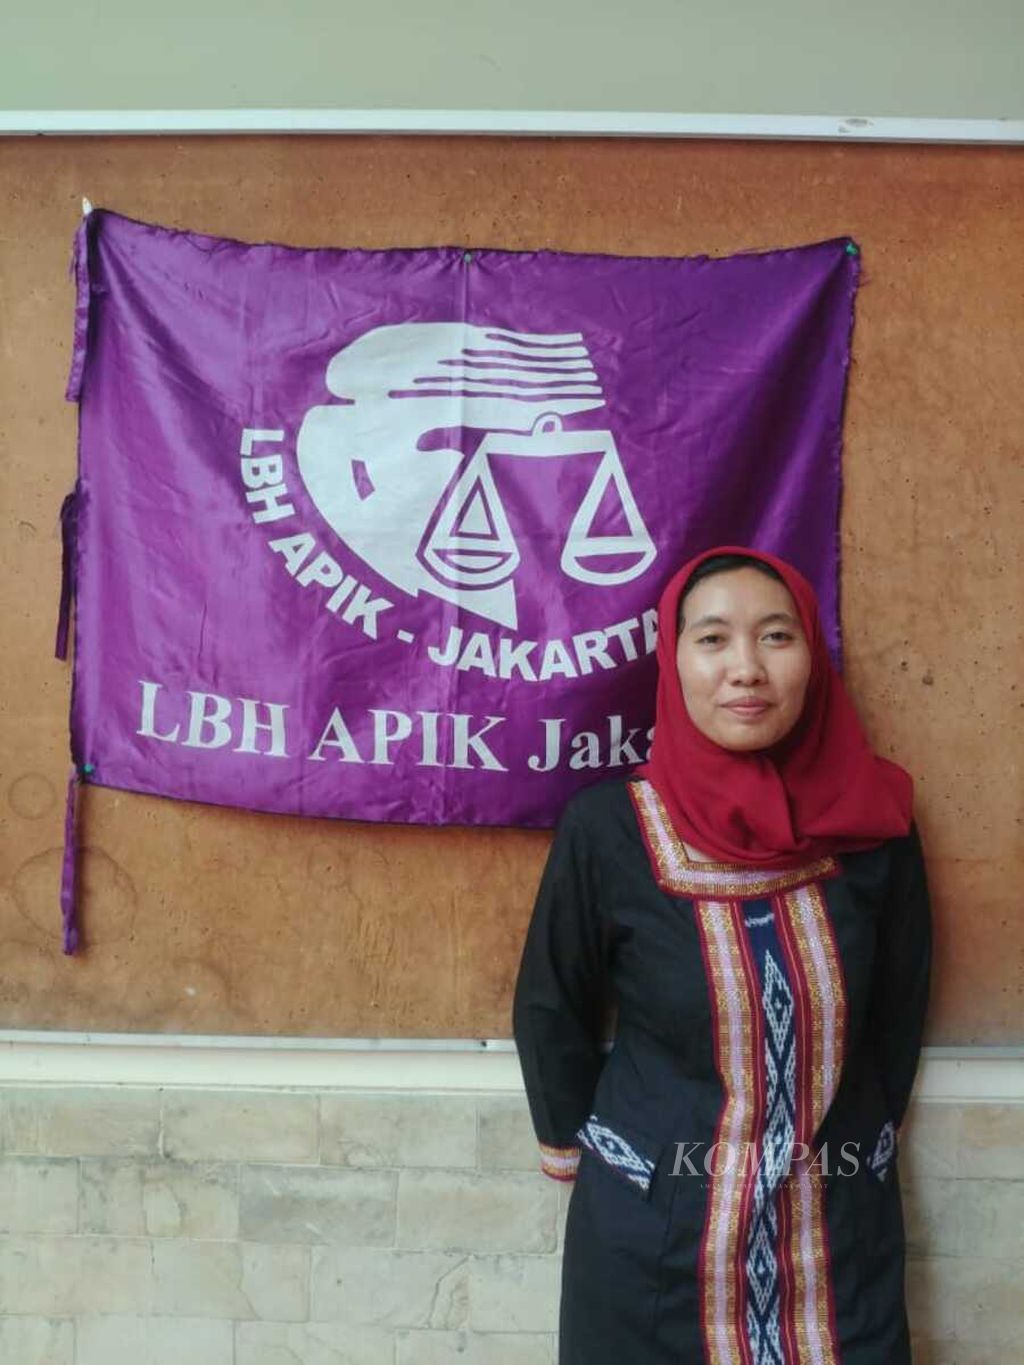 Direktur LBH APIK Siti Mazuma ketika ditemui di kantornya di Jakarta Timur, Sabtu (13/7/2019).